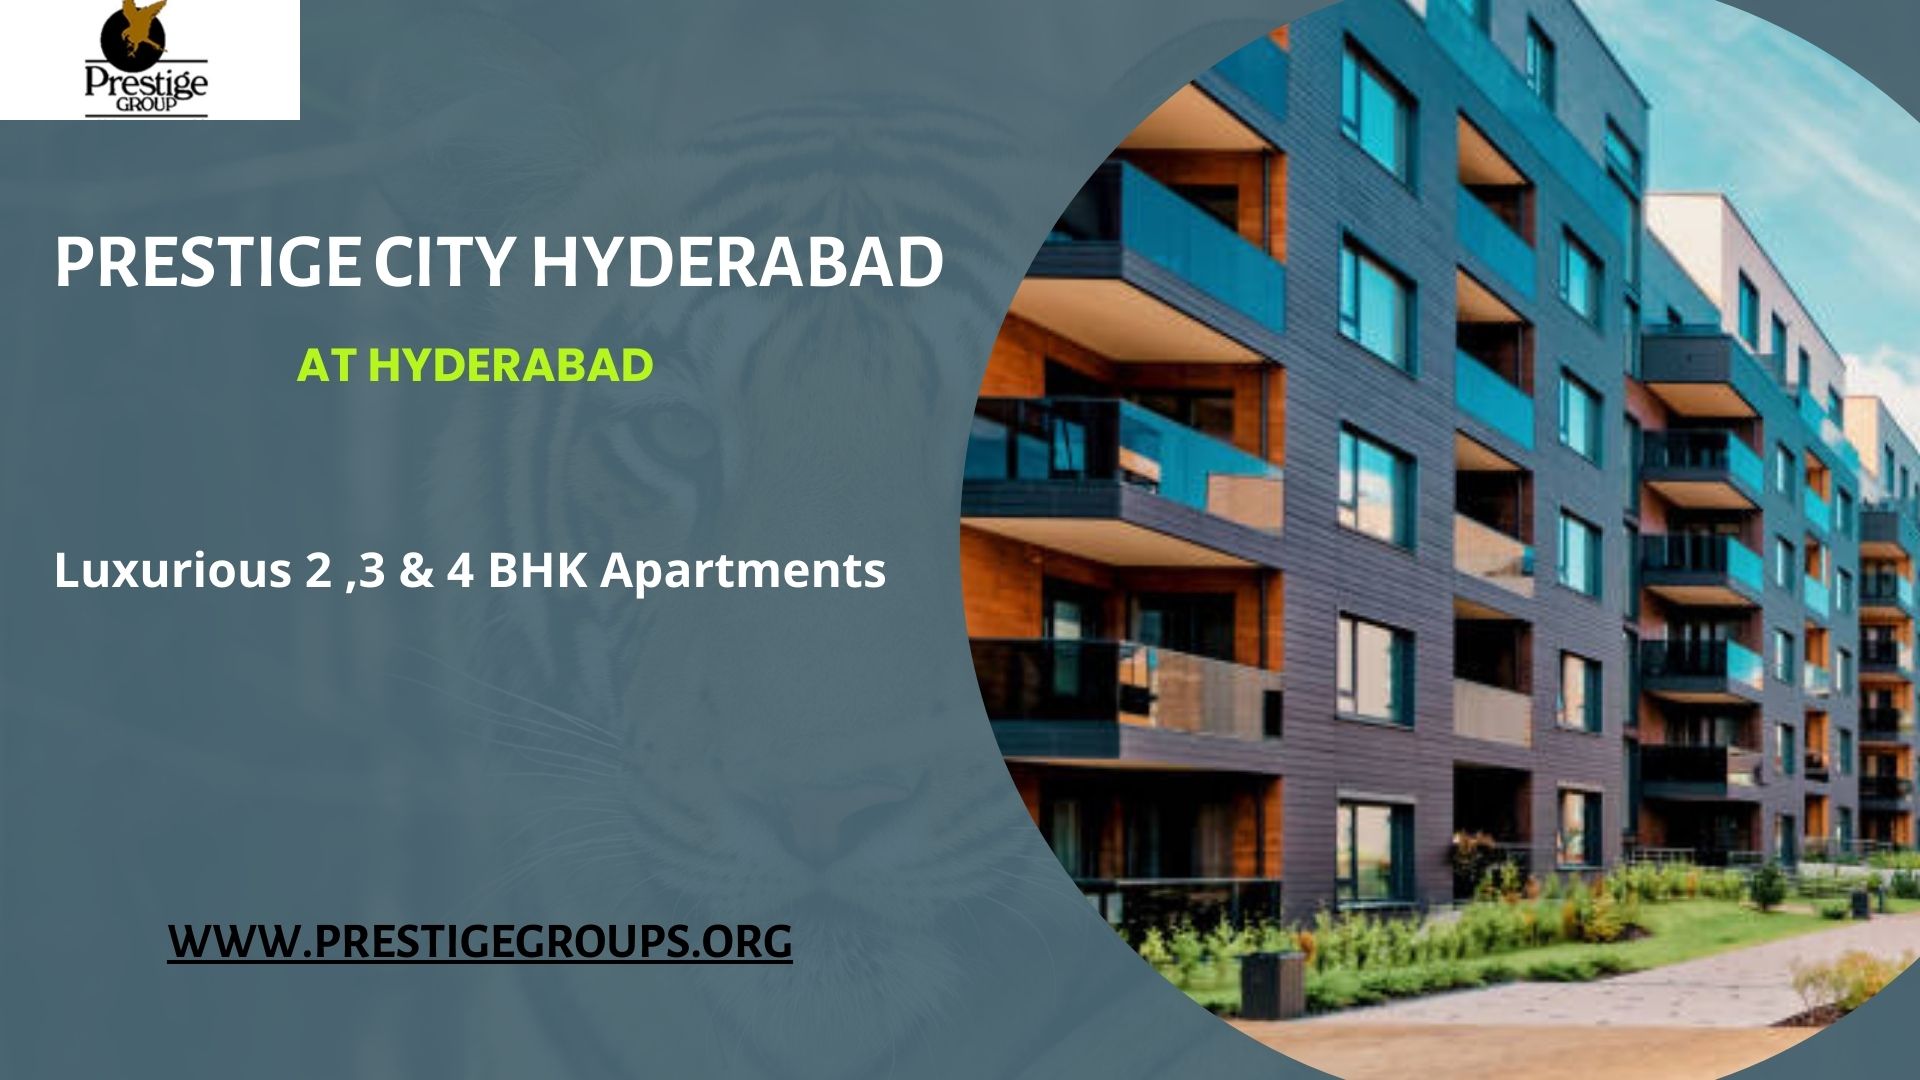 Prestige City Hyderabad- Residential Development Developed by Prestige Group